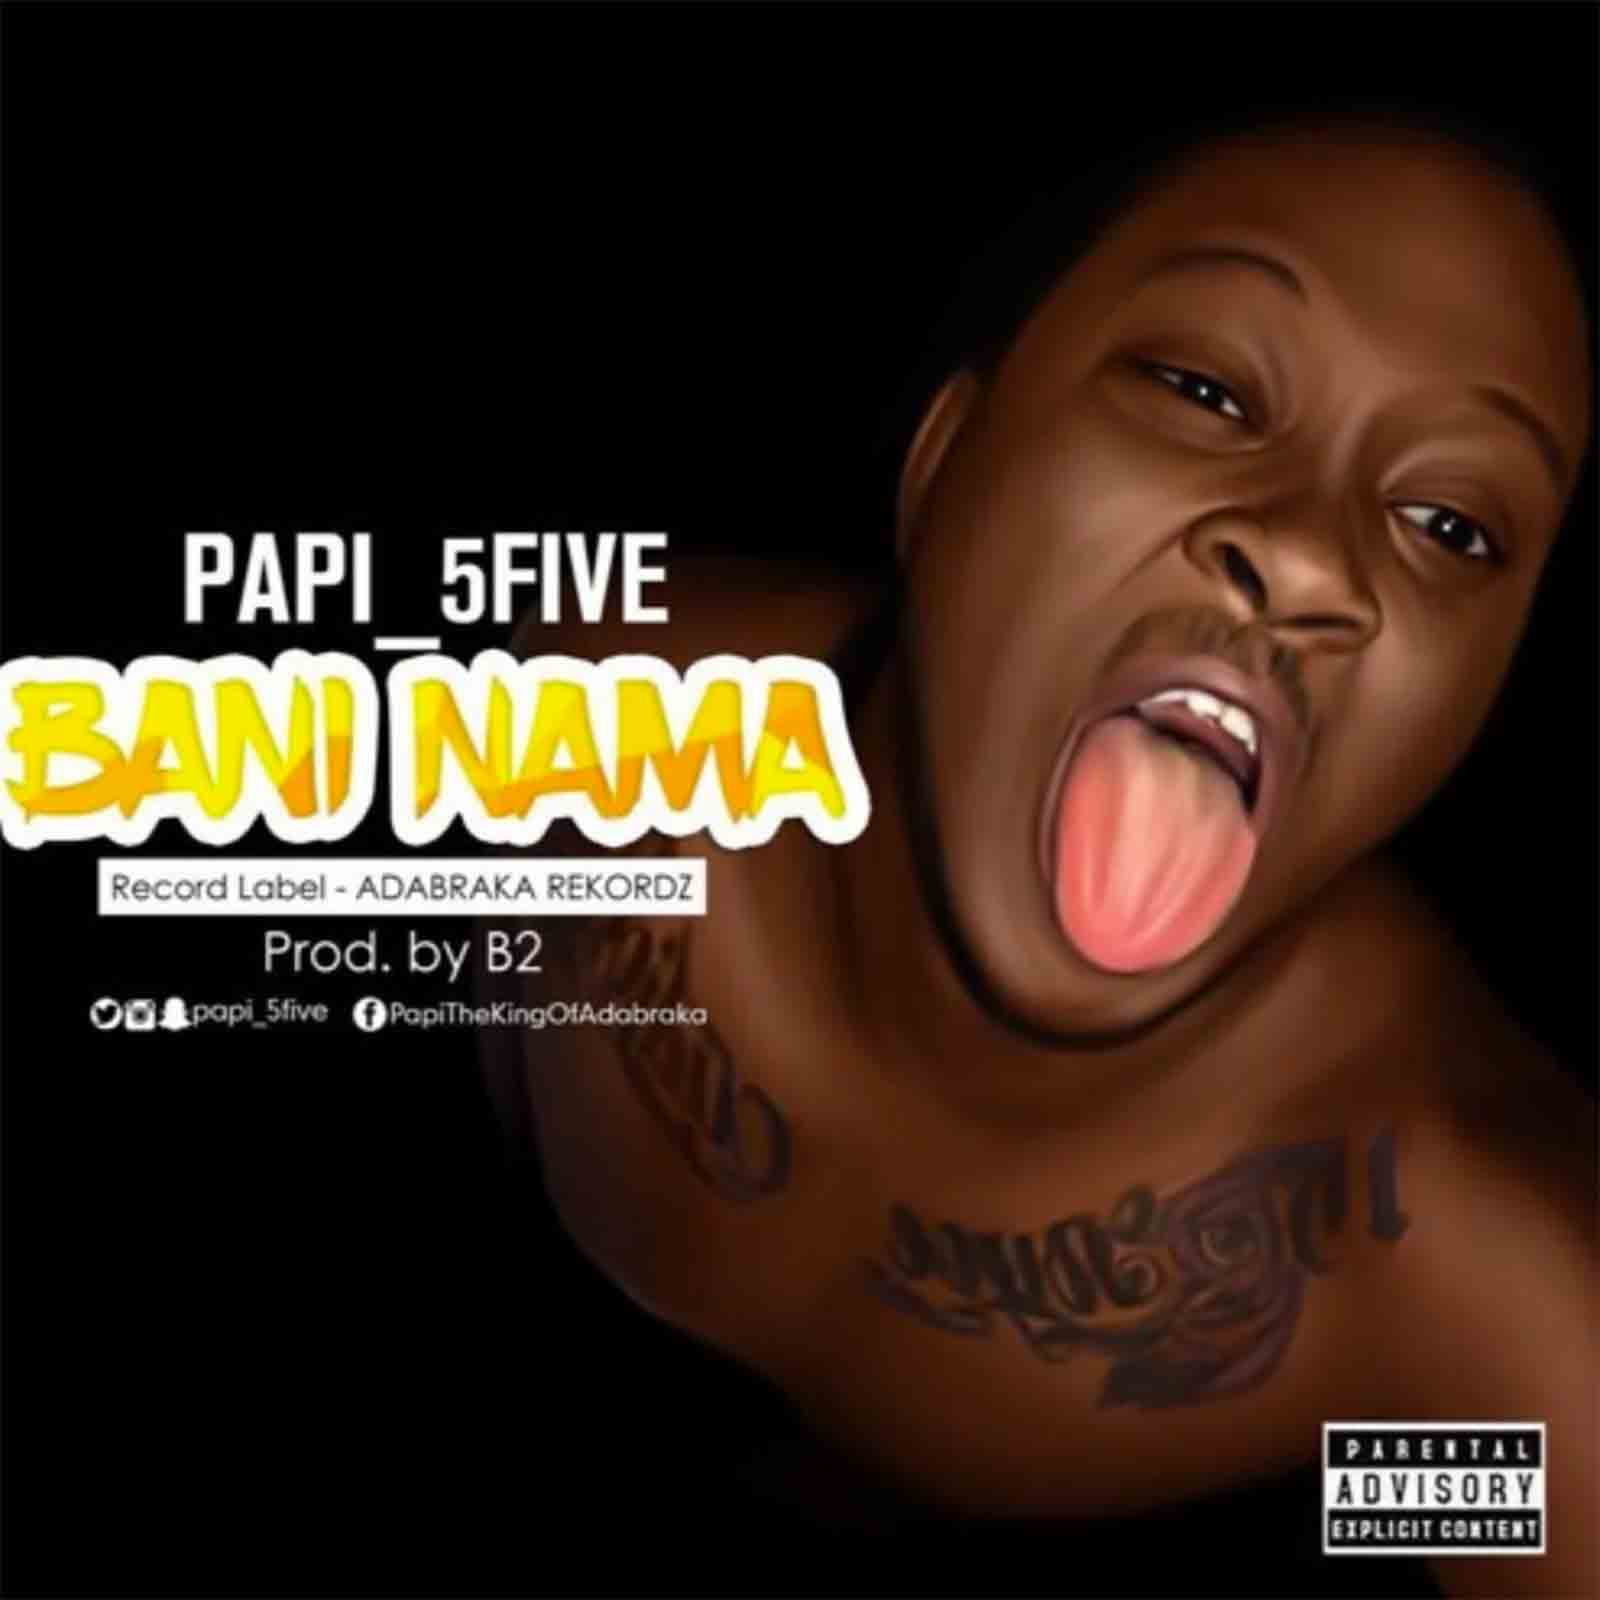 Bani Nama by Papi (5Five)